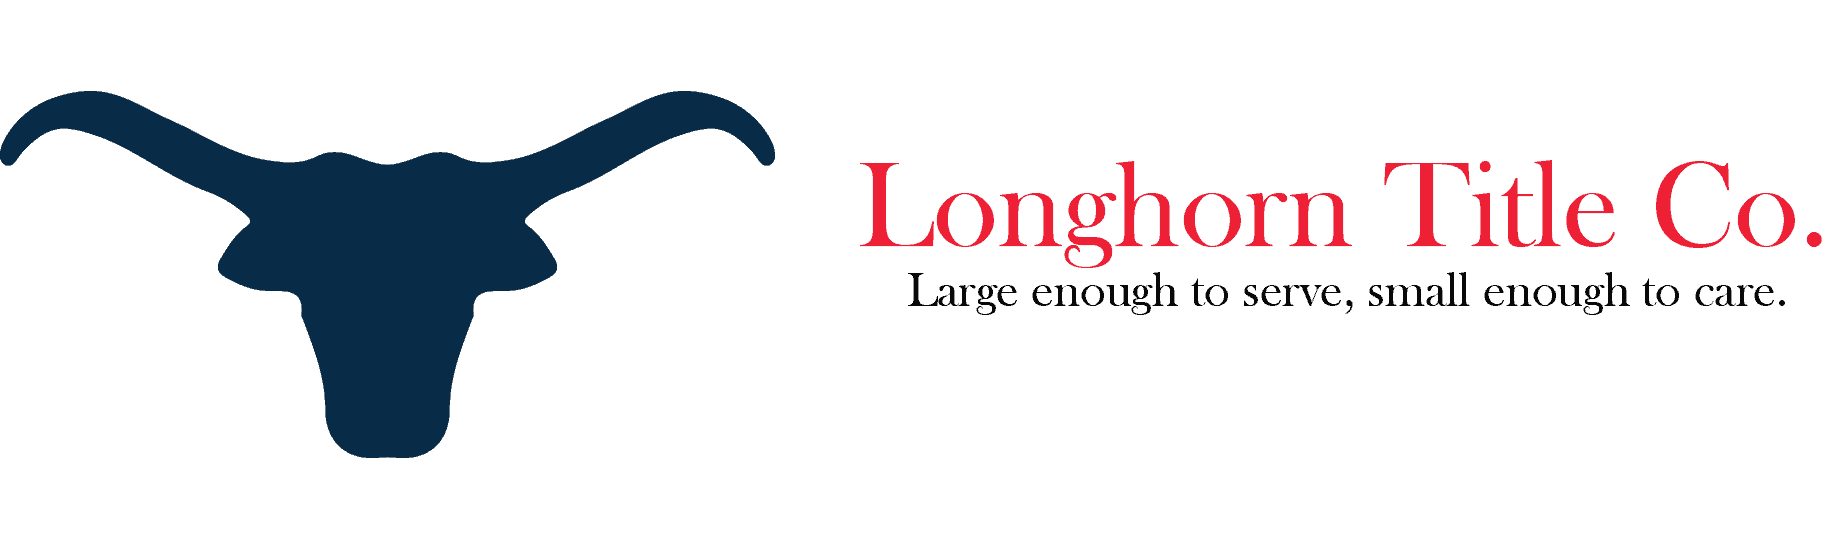 Title Company Logo - Home - Longhorn Title Company Inc. | Georgetown, Texas Title Company